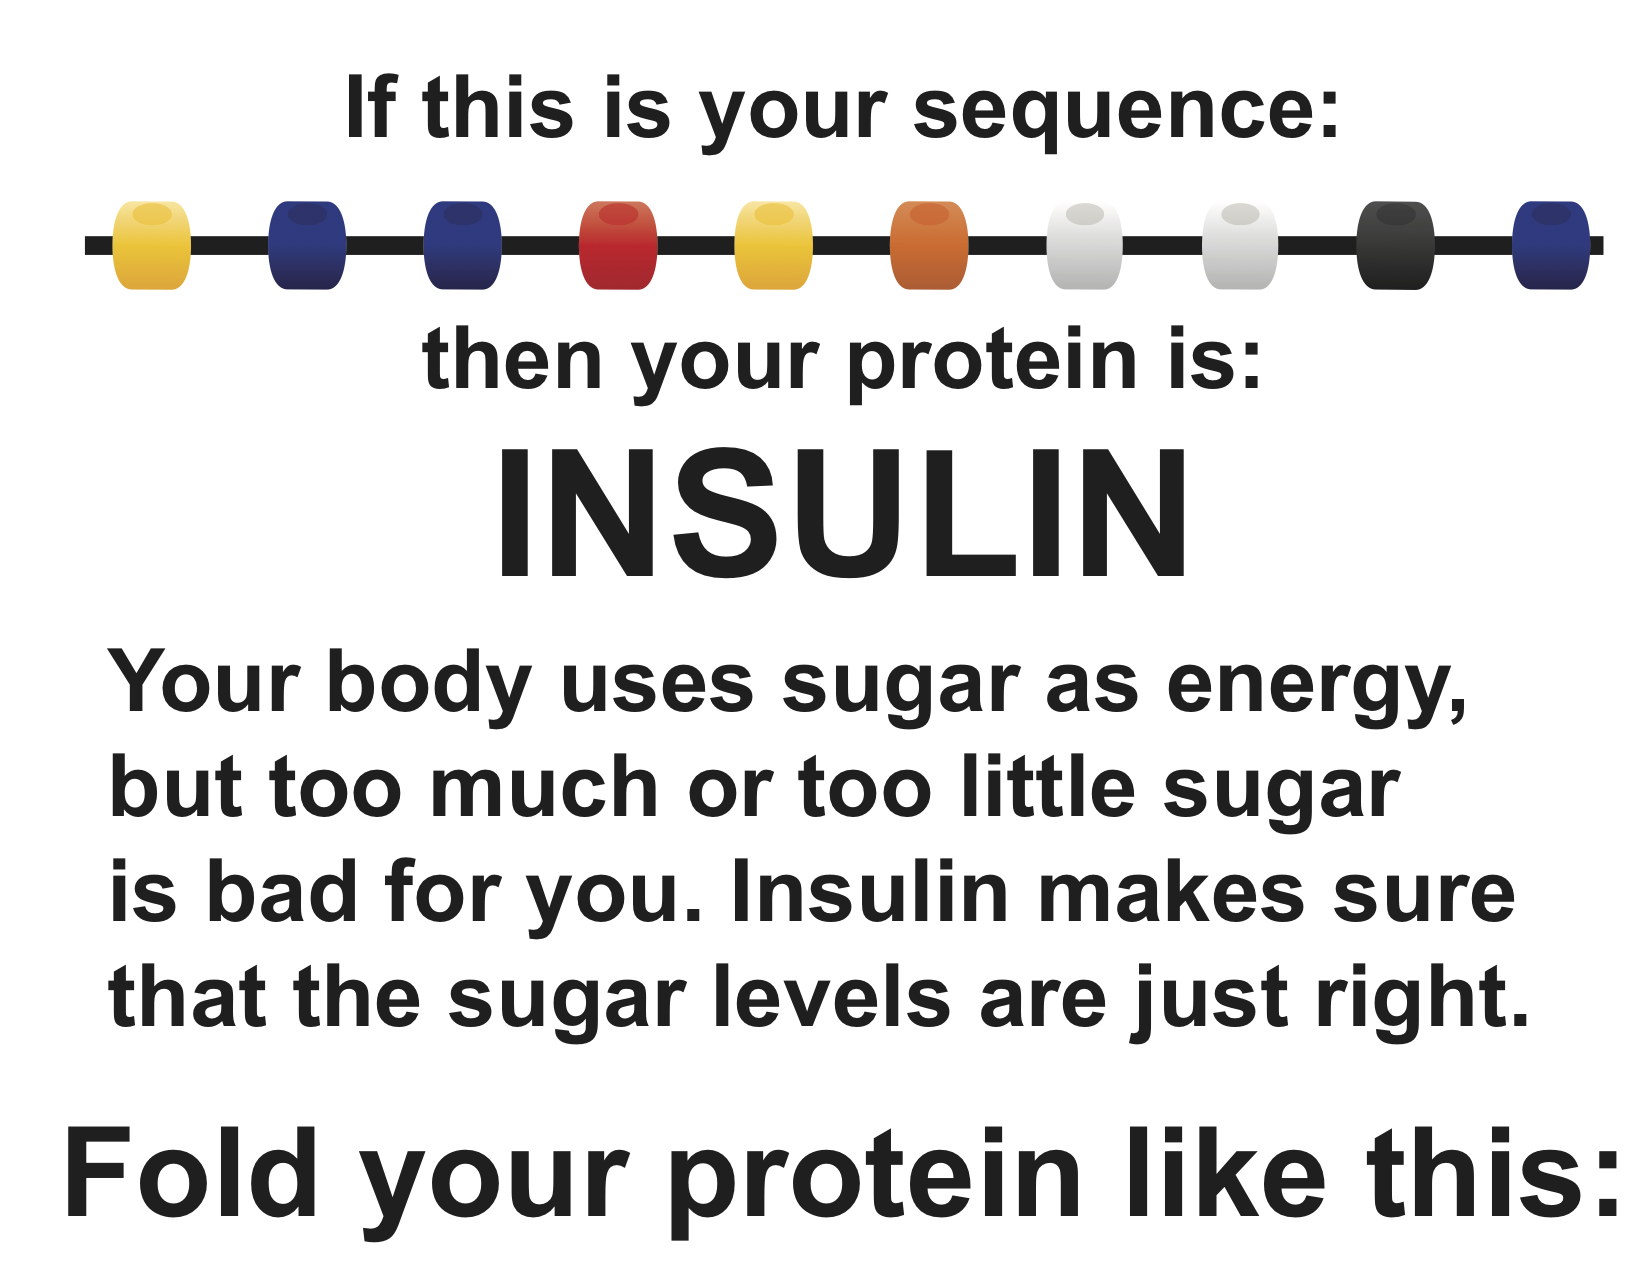 https://rockedu.rockefeller.edu/wp-content/uploads/2019/01/Puzzle-3_protein-folding-Insulin.png